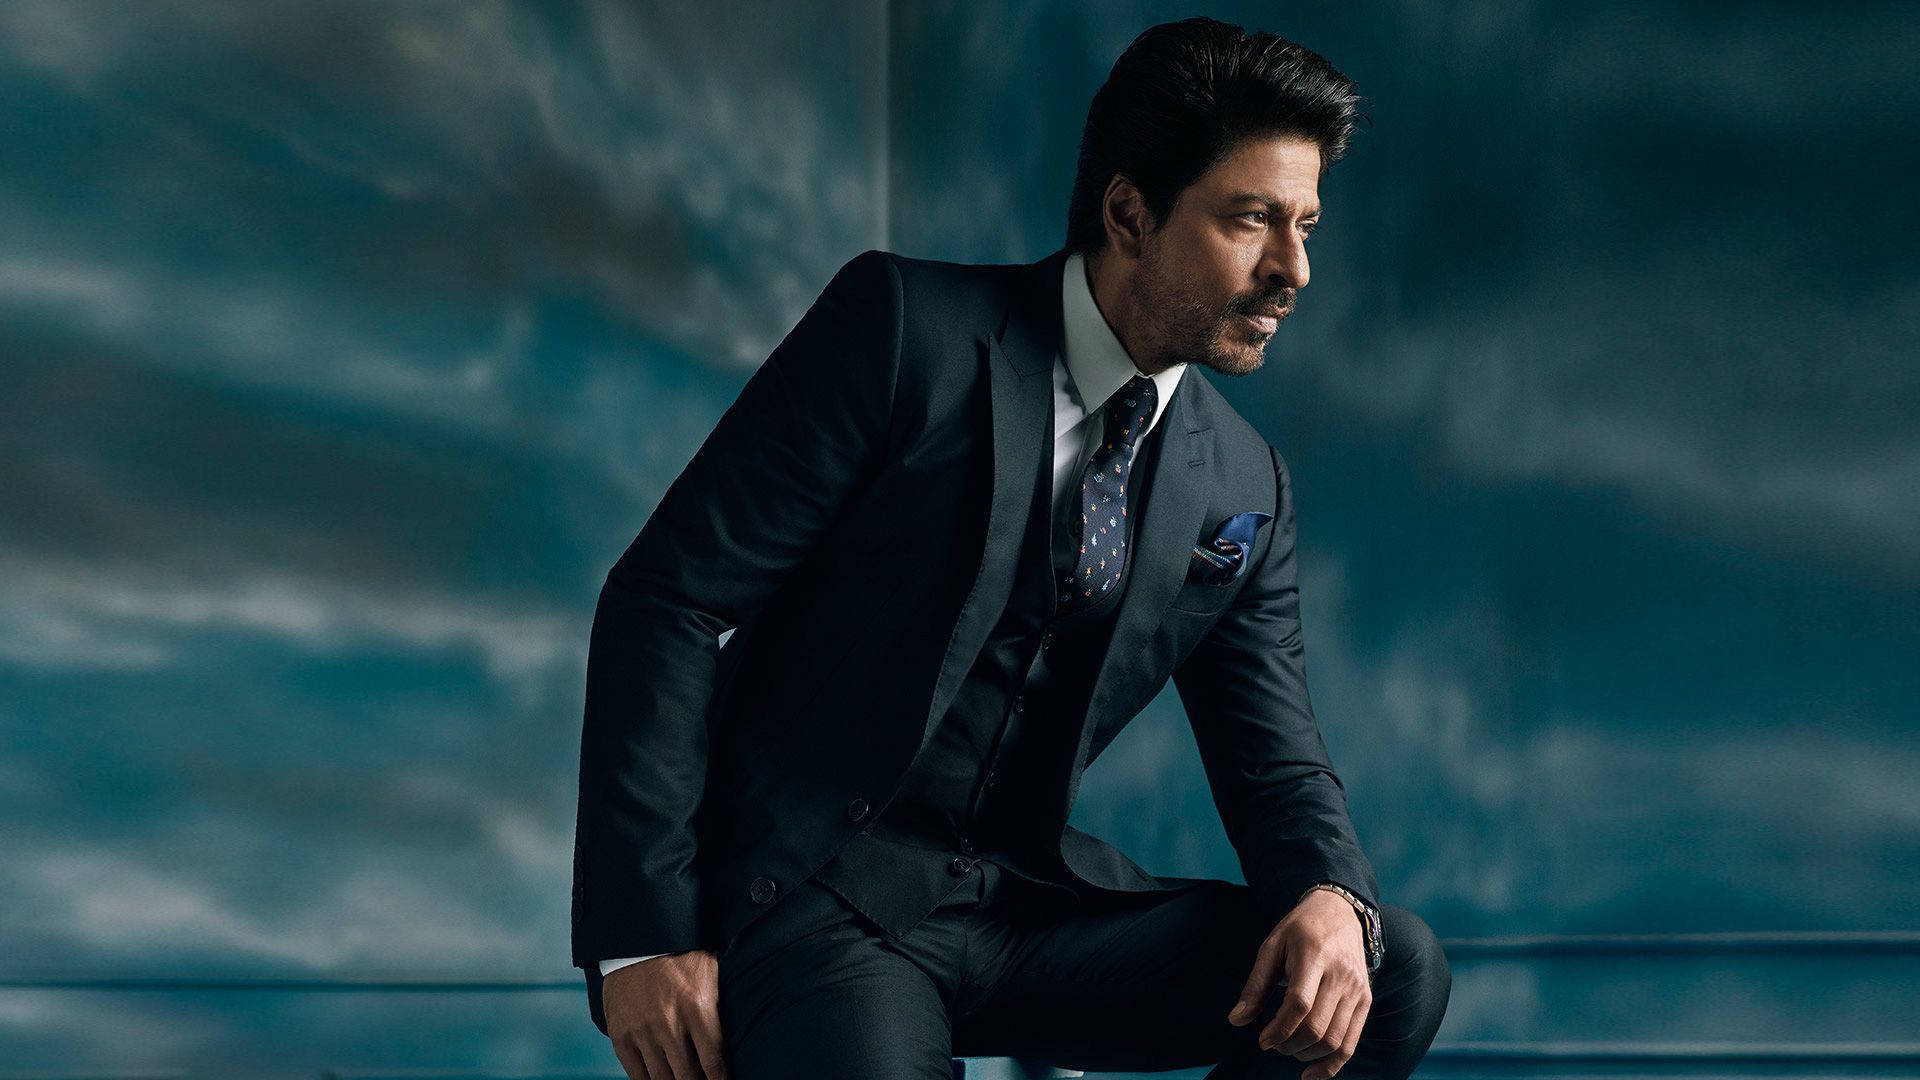 Shah Rukh Khan Gq Tuxedo Outfit Background